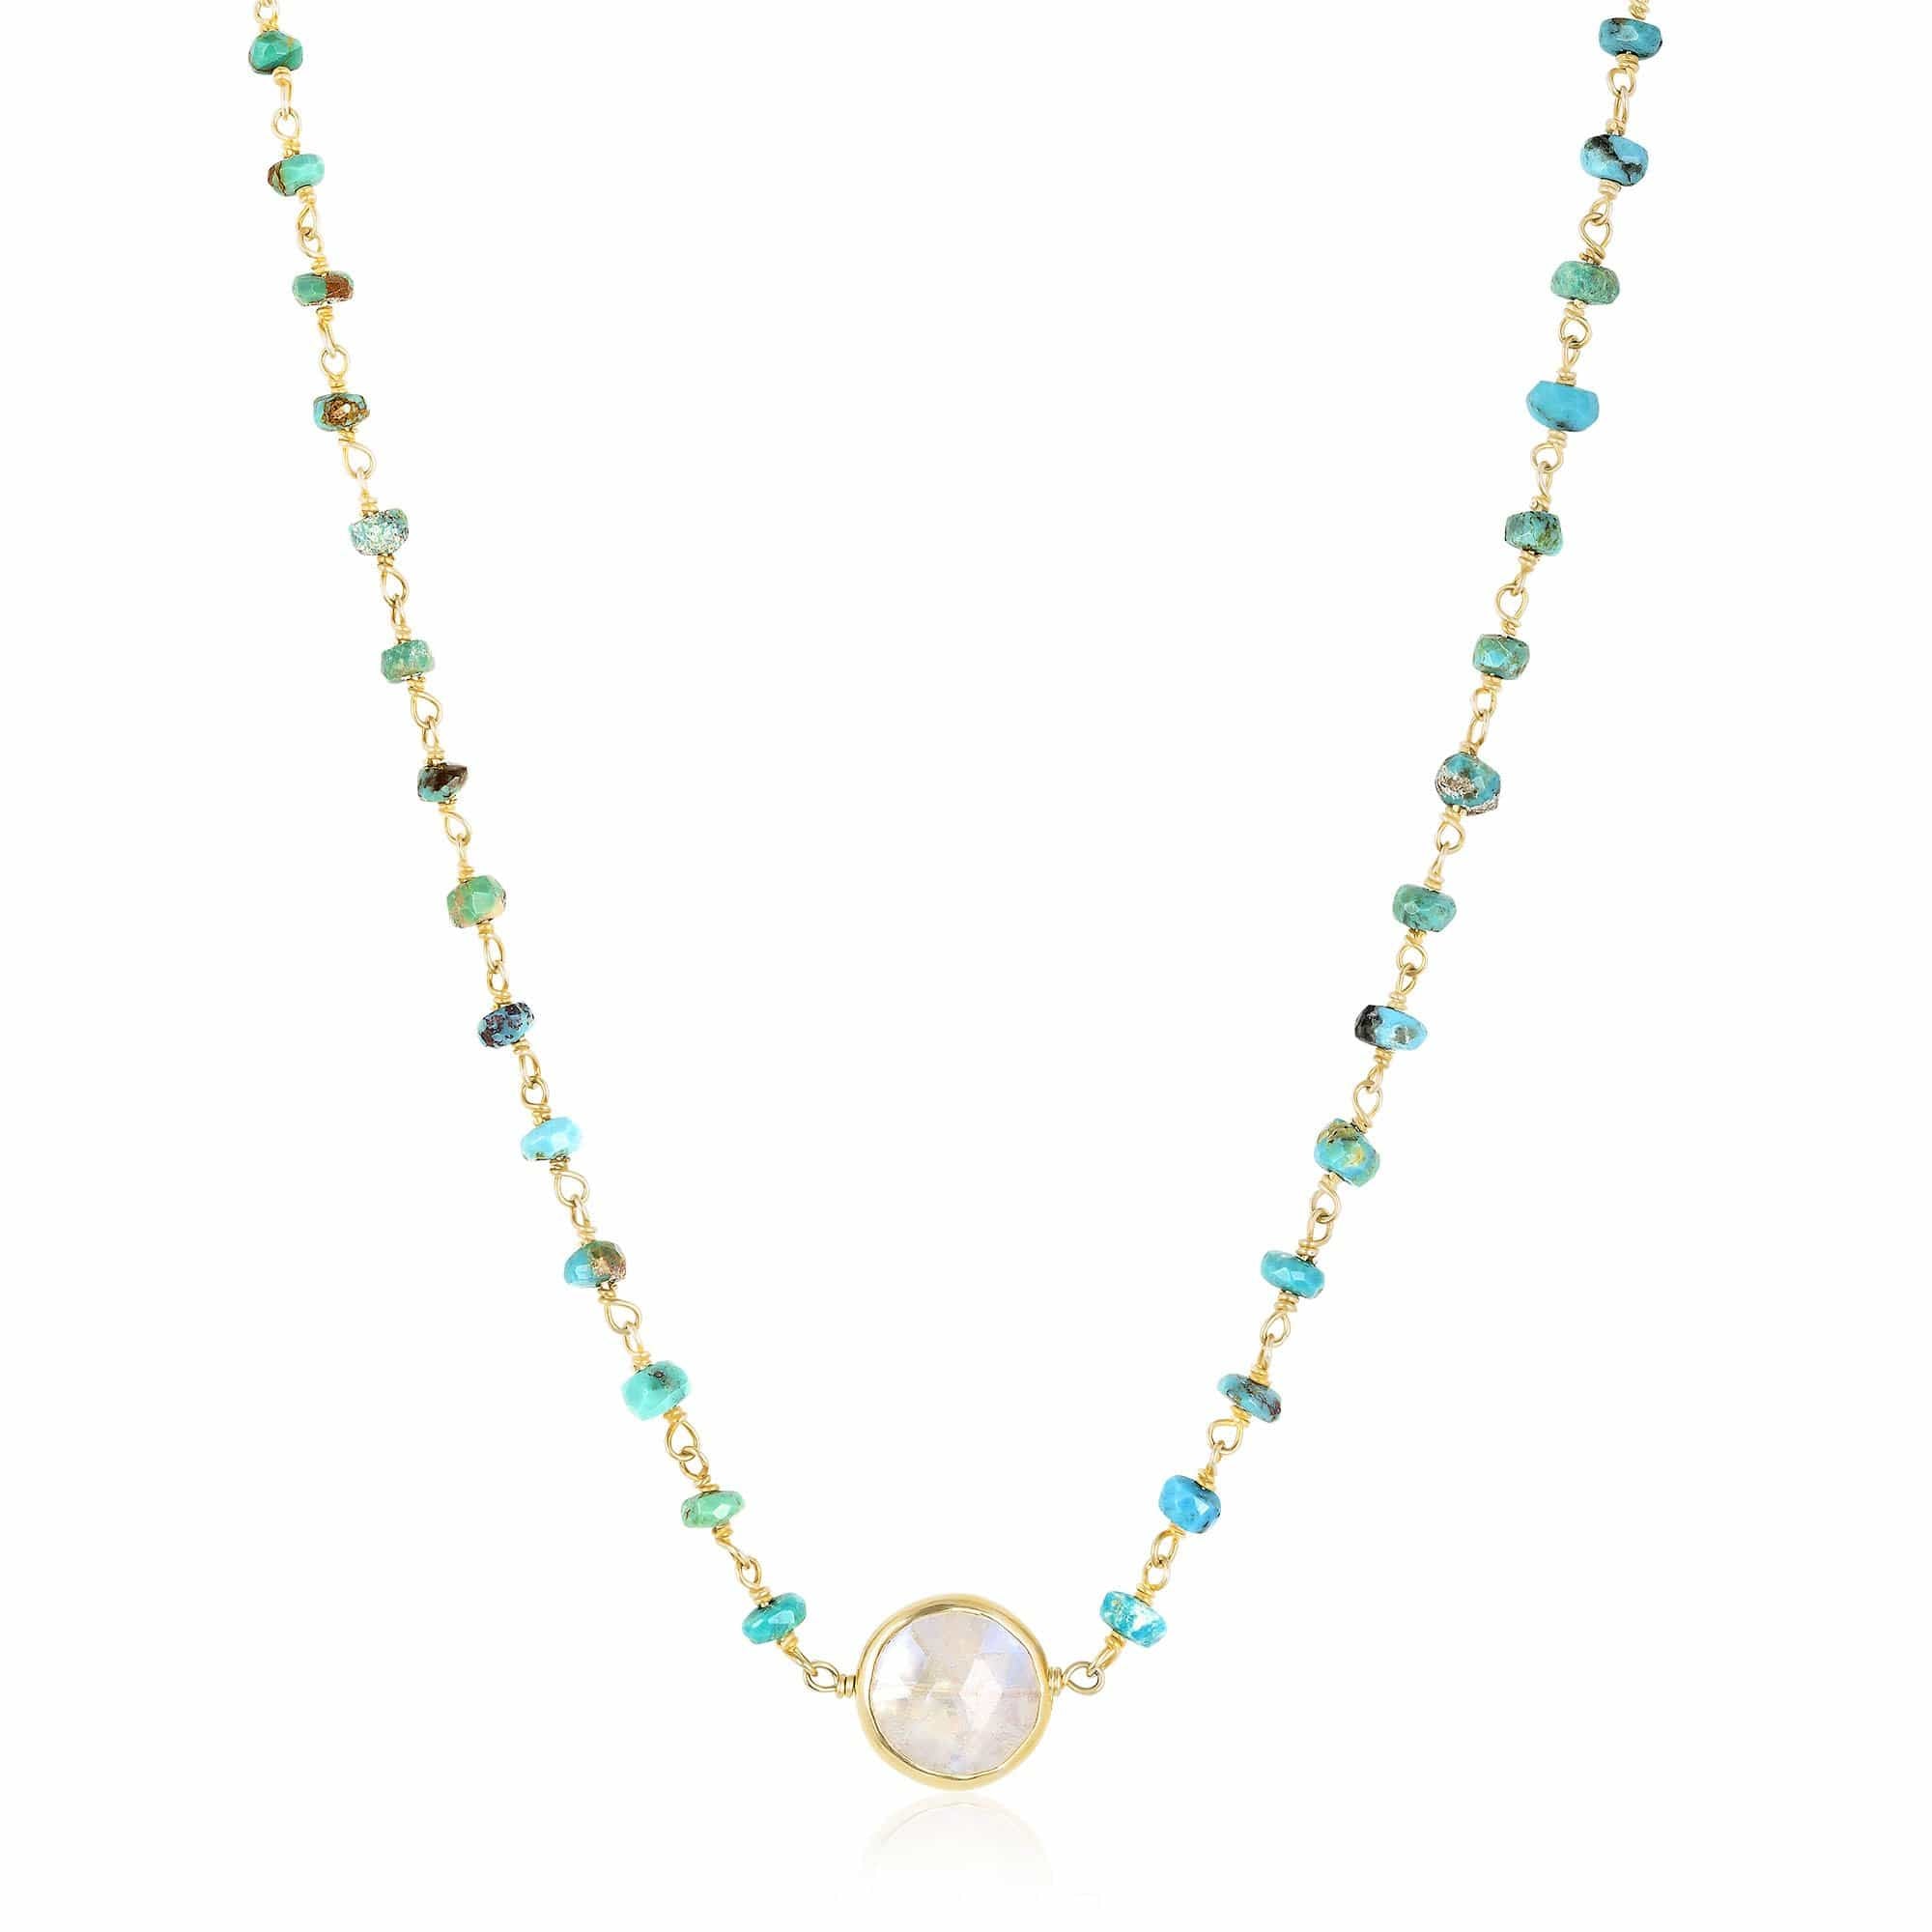 ela rae libi II choker necklace turquoise rainbow moonstone 14k yellow gold plate